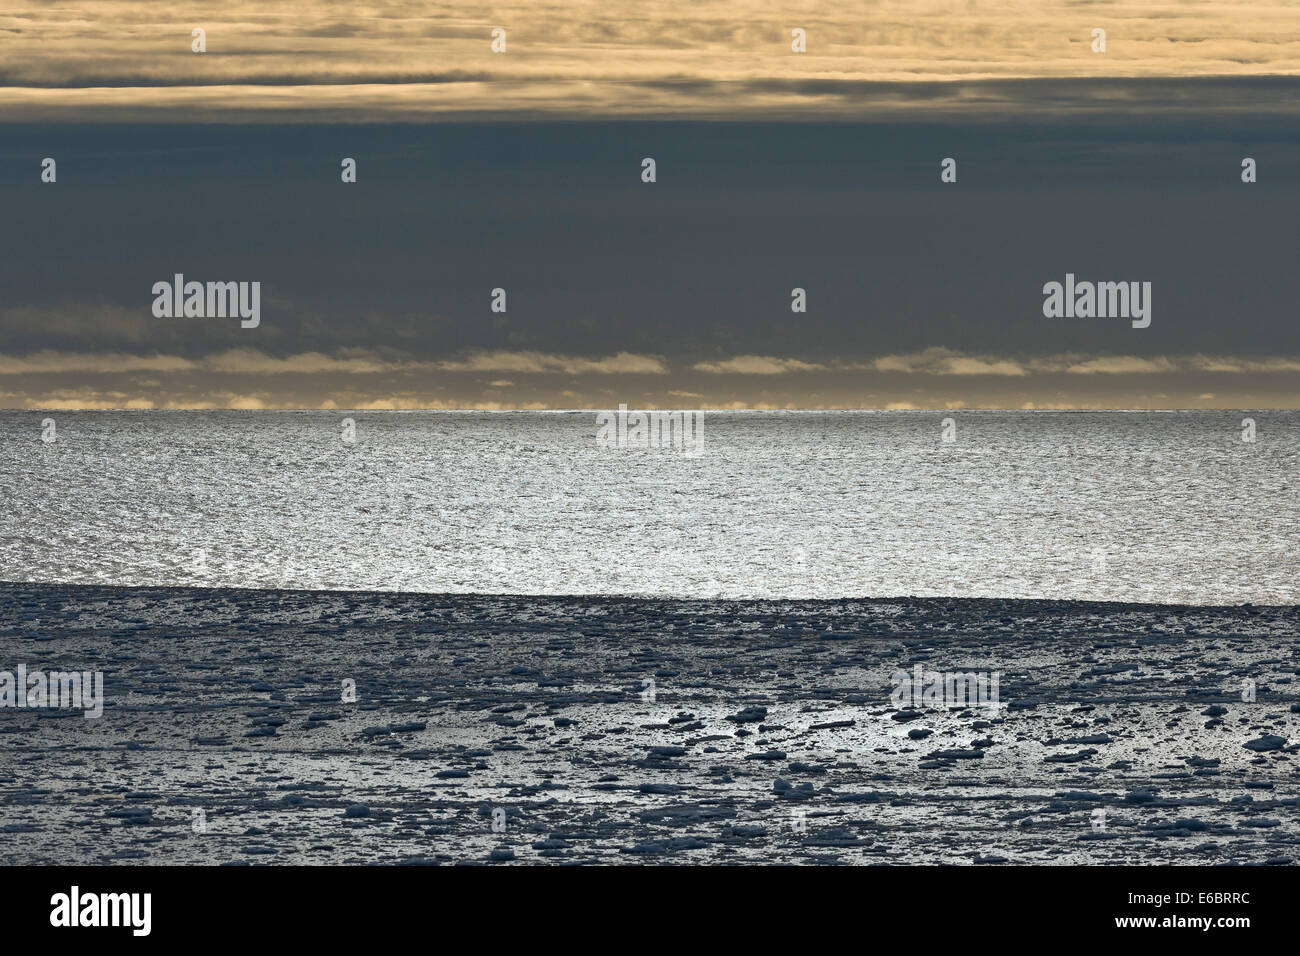 Ice floes, bordo della banchisa, Oceano Artico, Spitsbergen, isole Svalbard Isole Svalbard e Jan Mayen, Norvegia Foto Stock